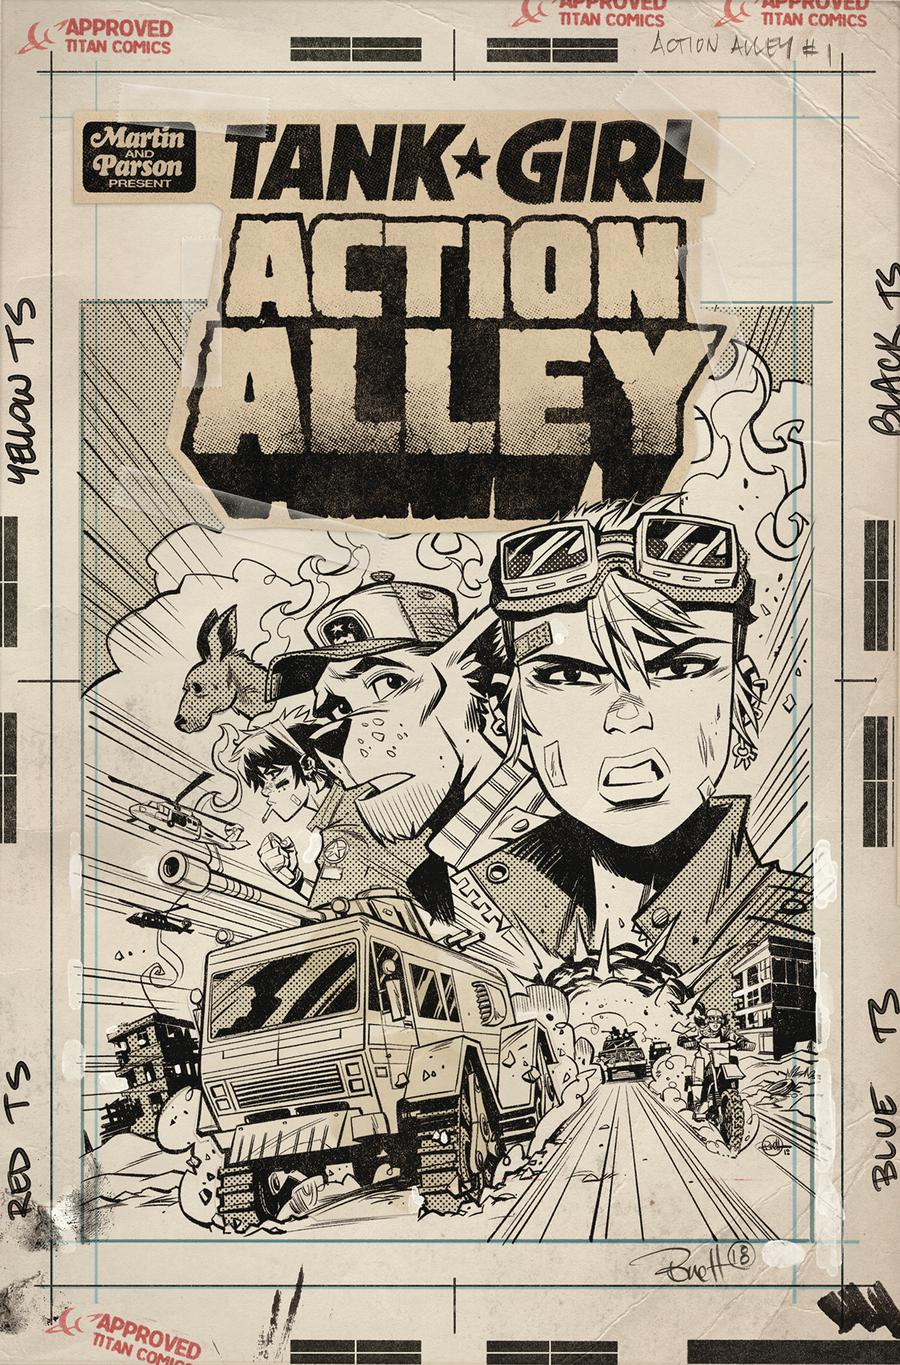 Tank Girl Vol 3 #1 Action Alley Cover D Variant Brett Parson Artist Edition Cover